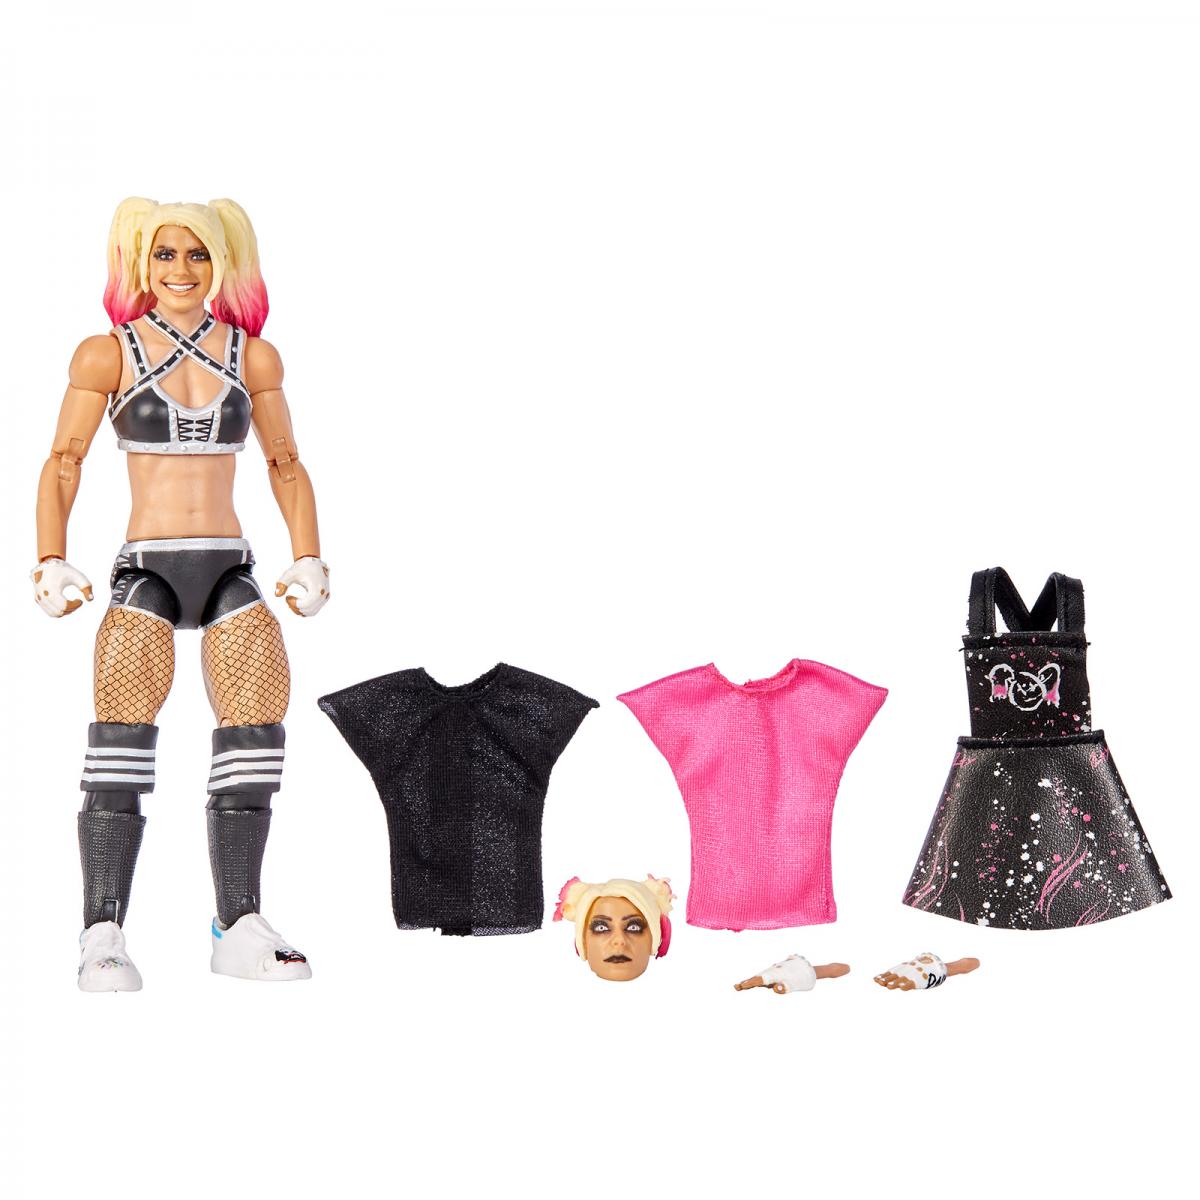 2022 WWE Mattel Ultimate Edition Series 12 Alexa Bliss